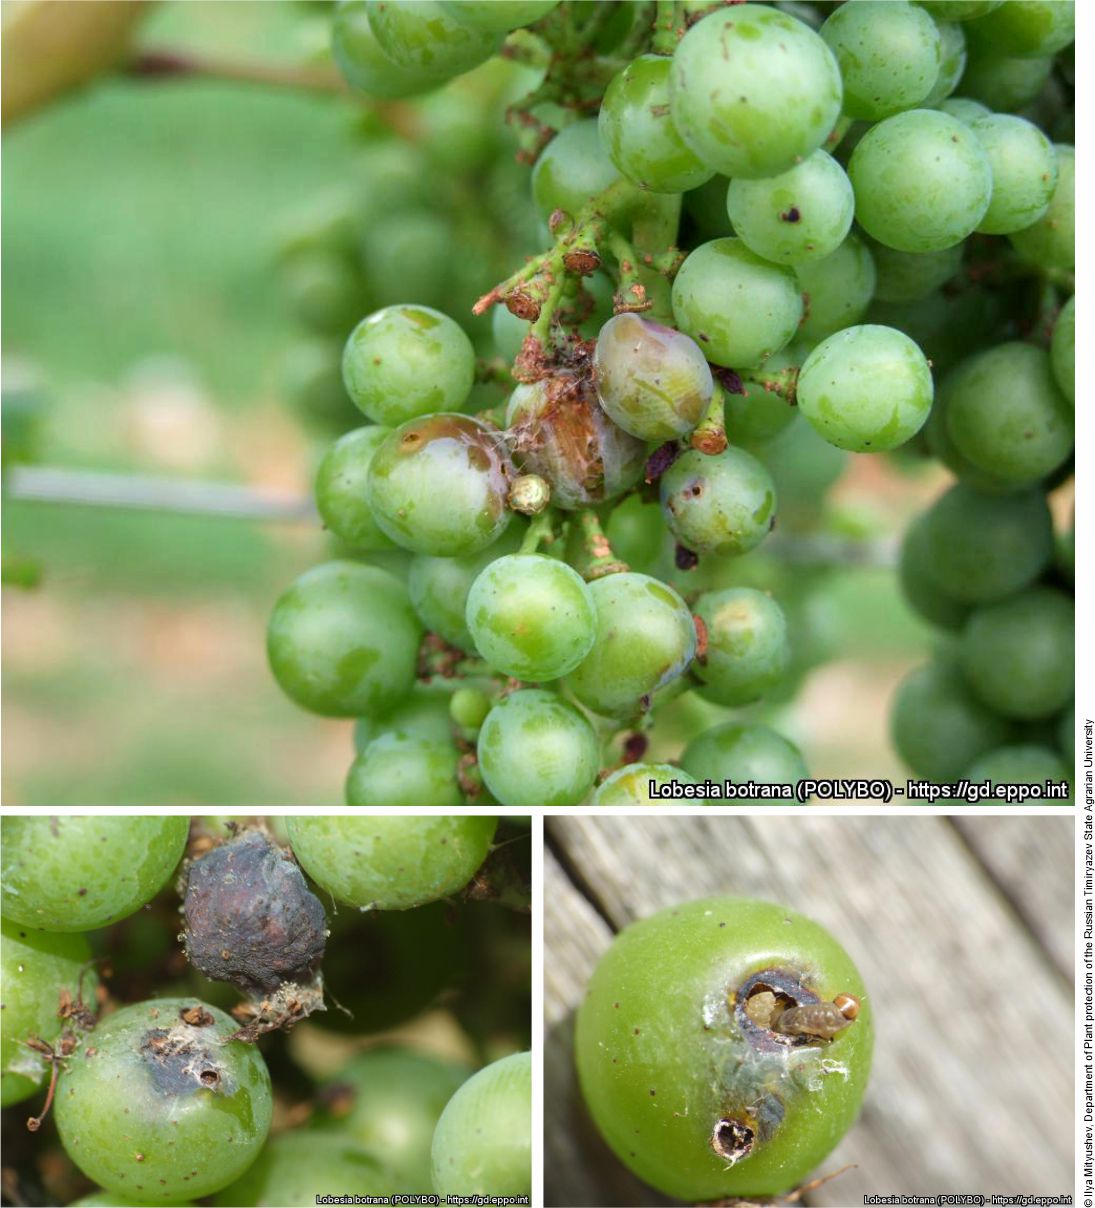 Lobesia botrana daños en uva